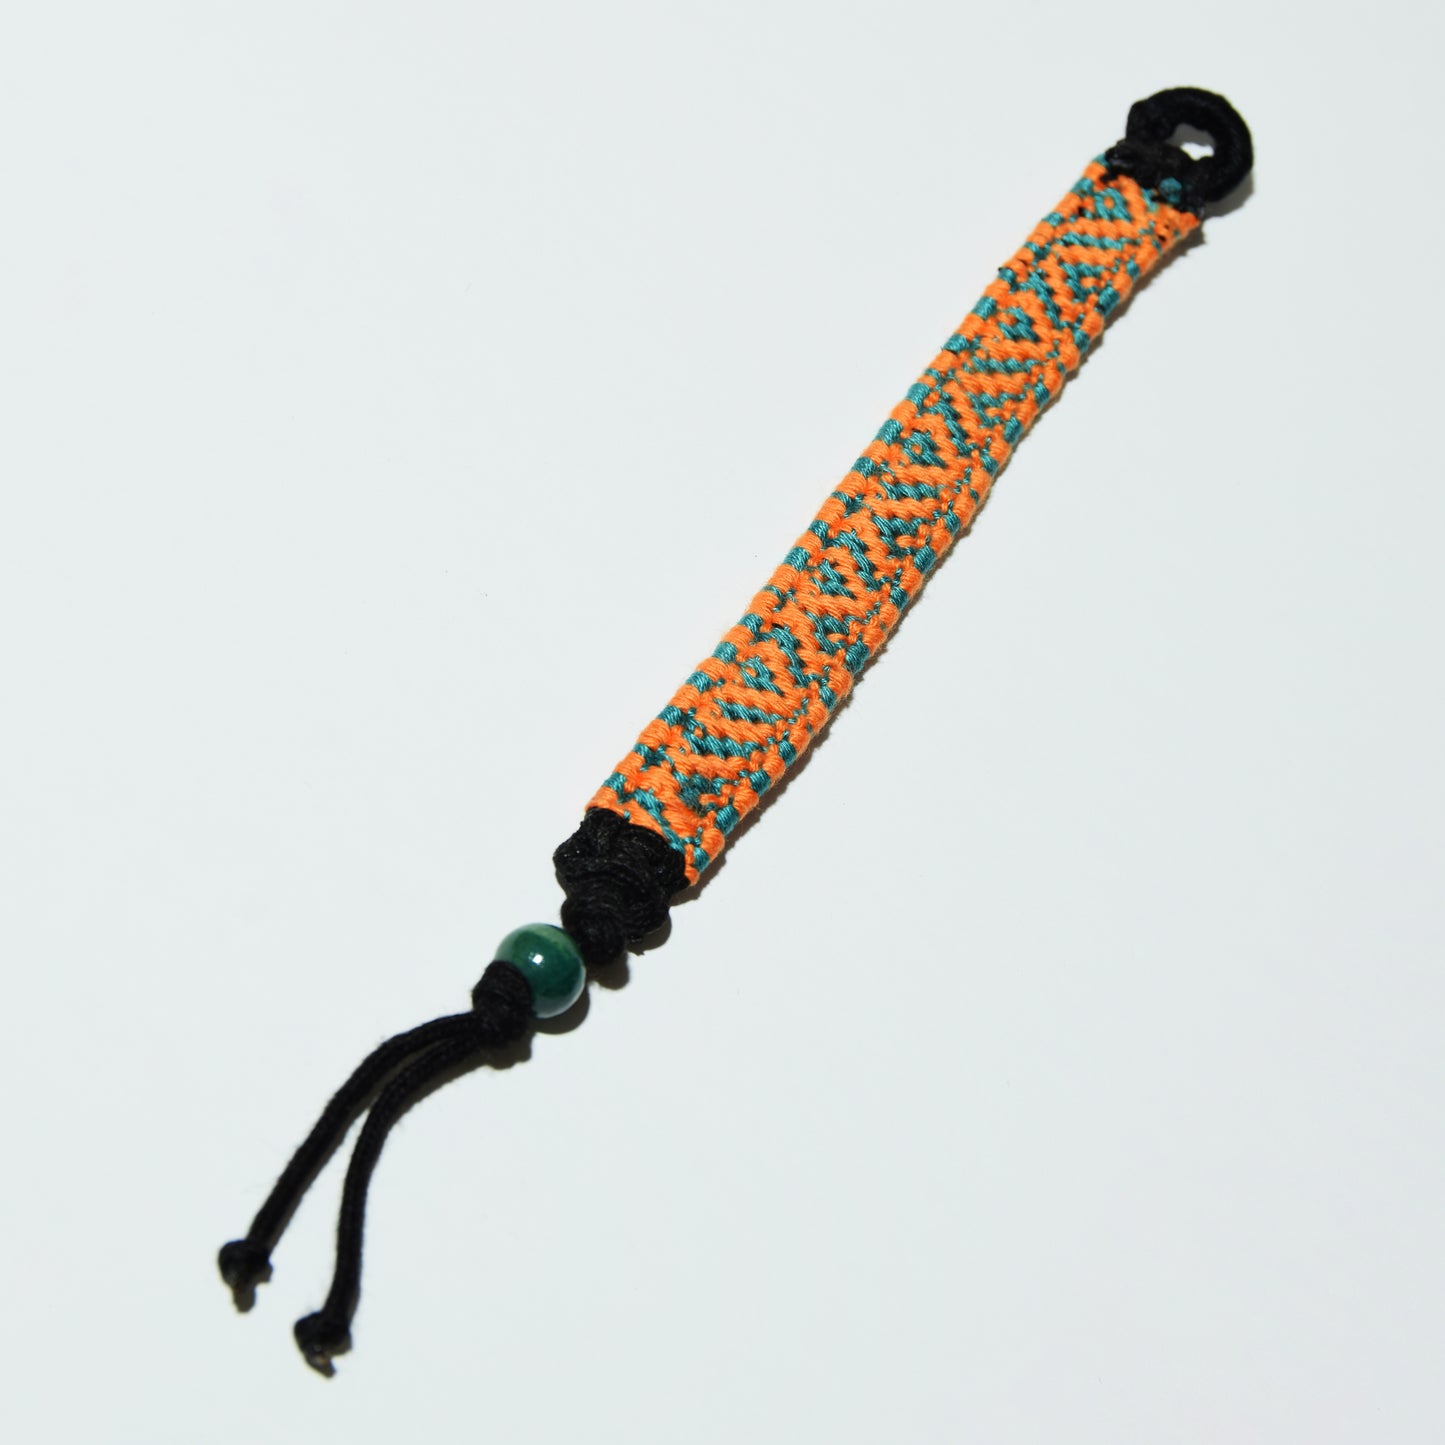 Ainu "Emushiatsu Weave" Bracelet